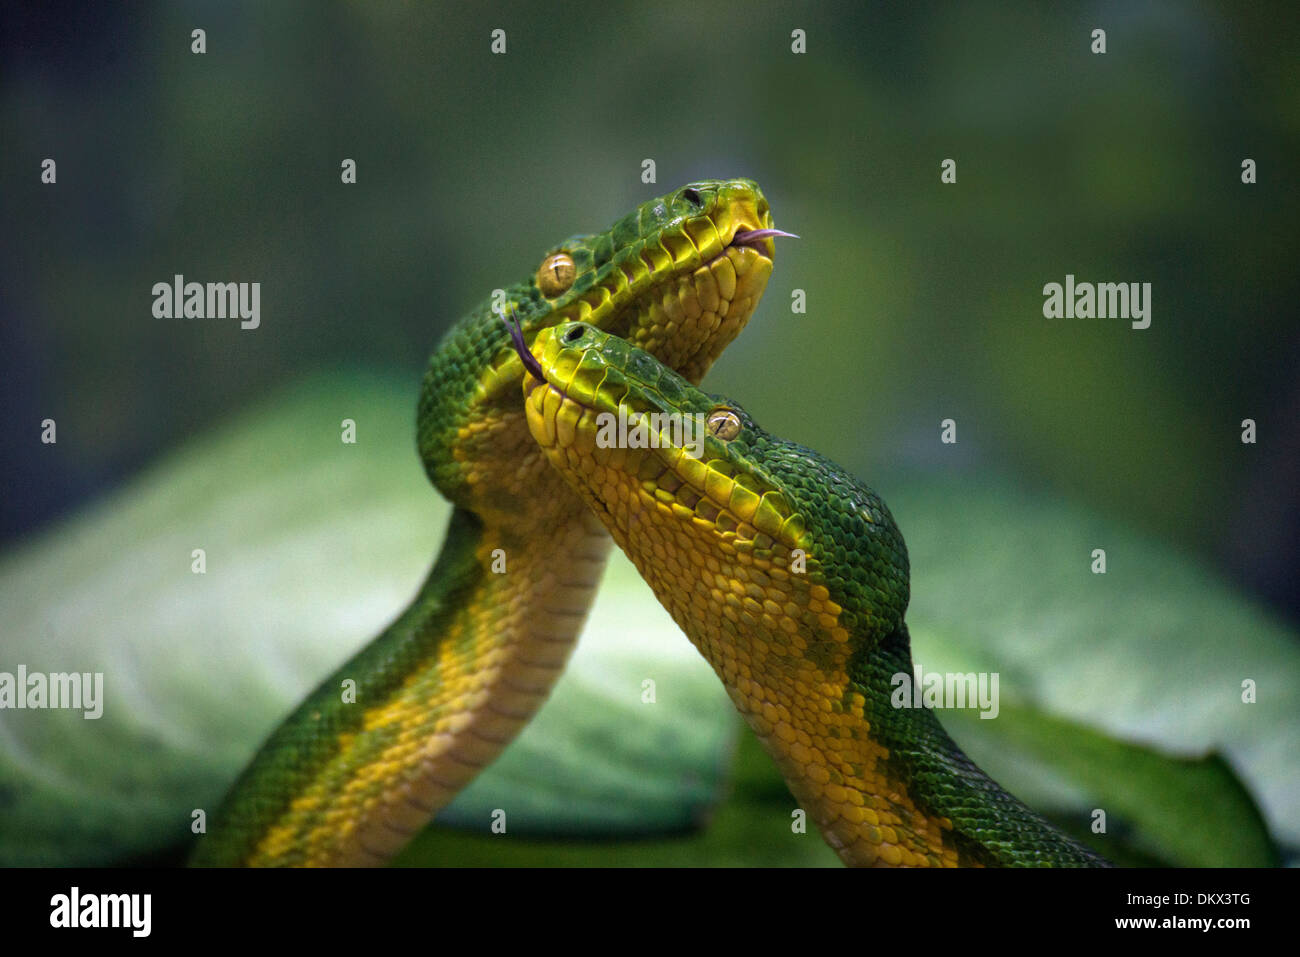 emerald tree boa, boa, corallus caninus, snake, reptile, animal, green, two, Stock Photo